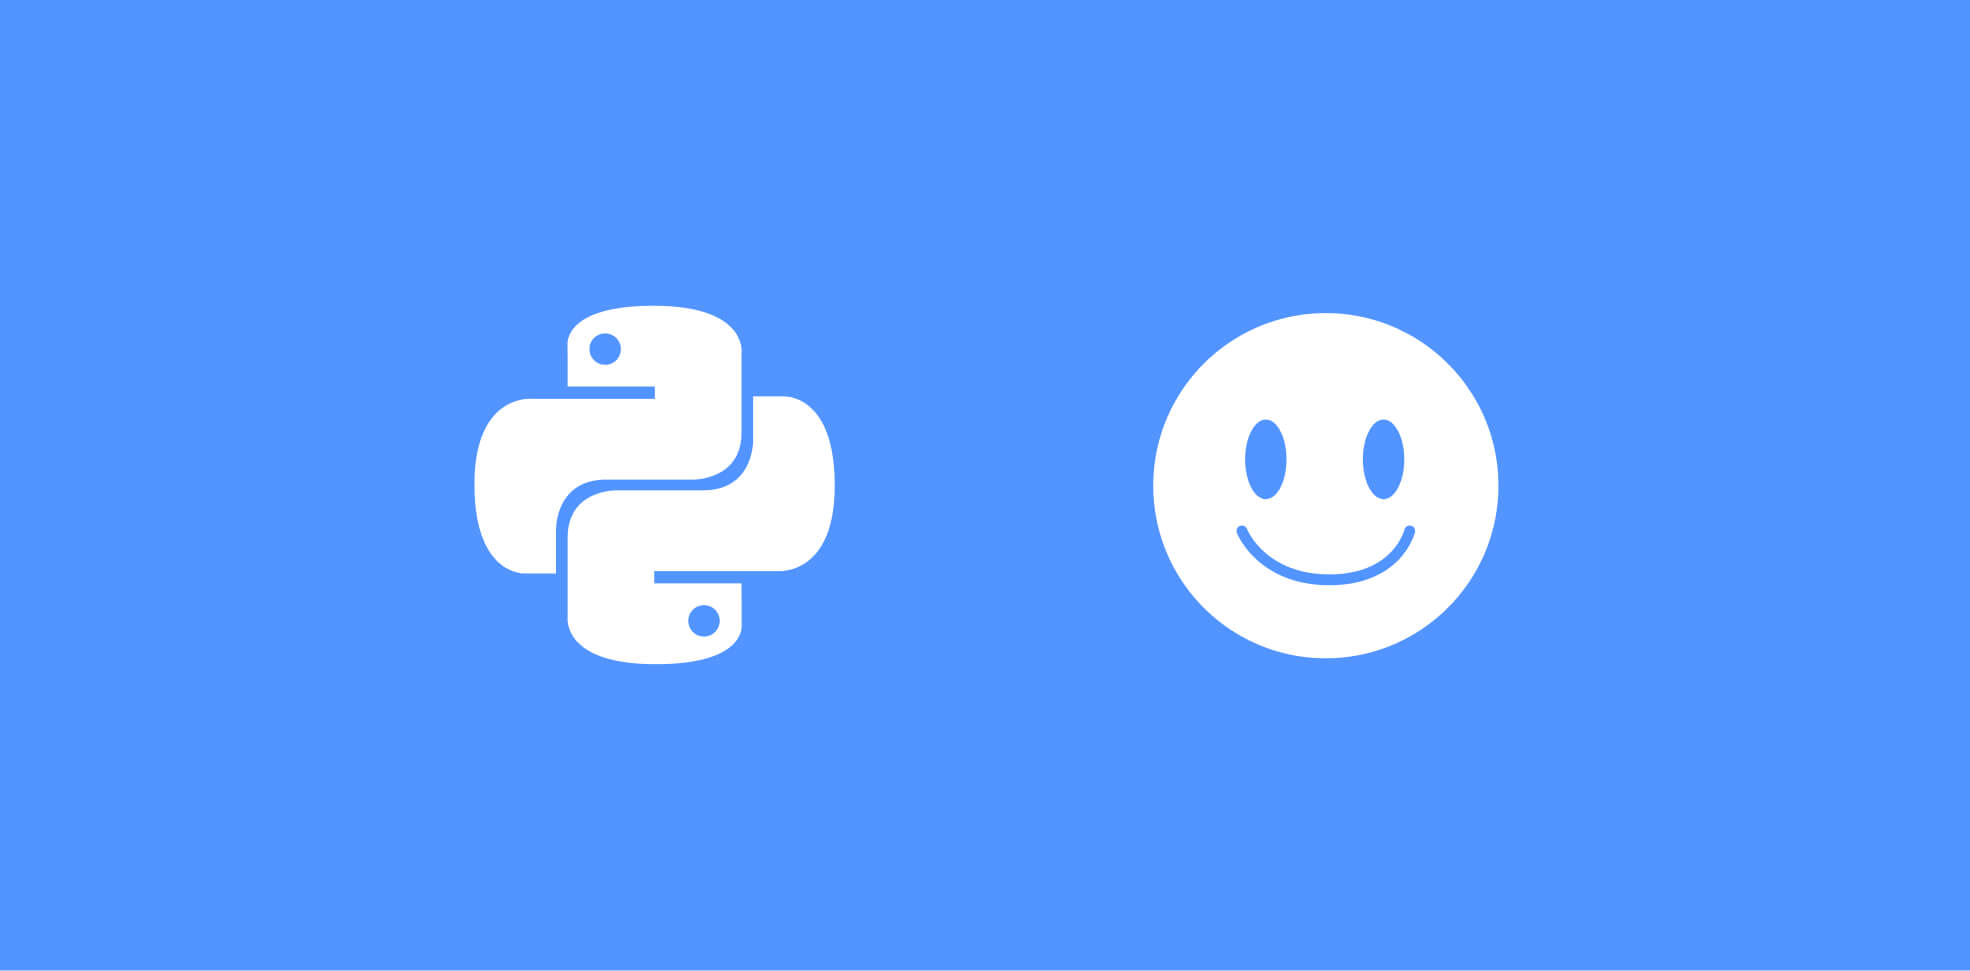 python program logo and smiling emoji on a blue background